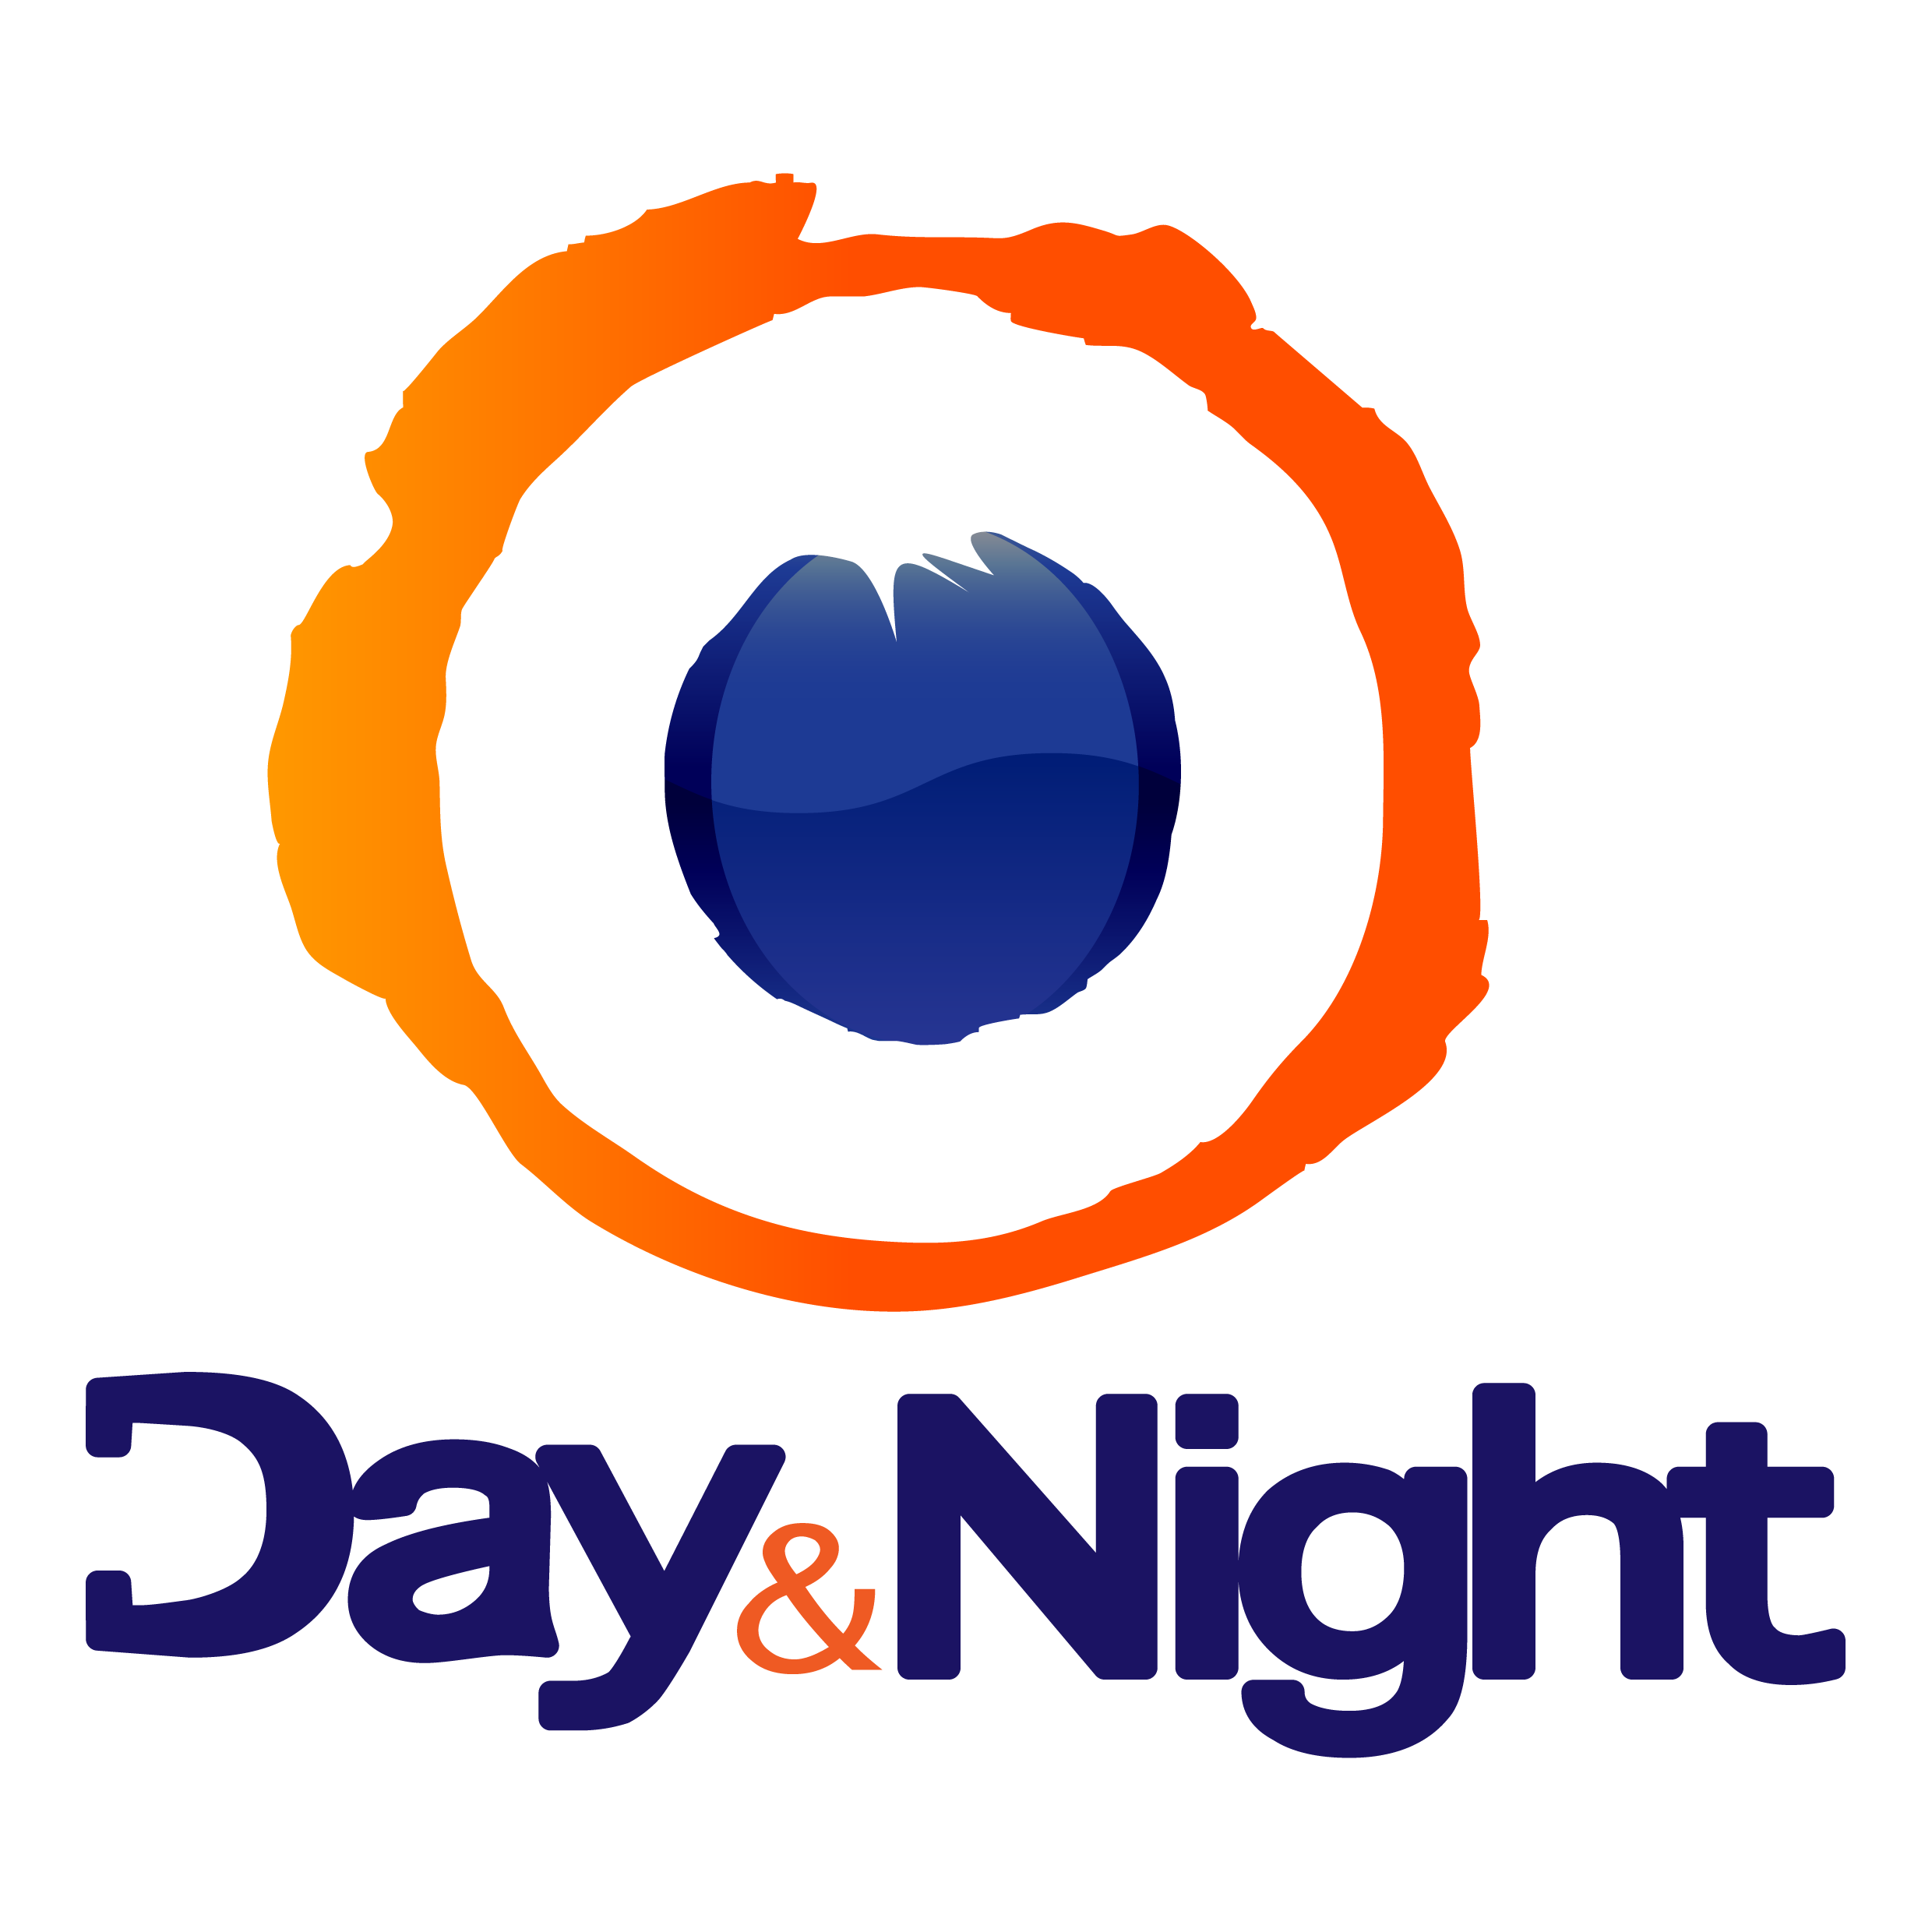 Day and Night Radio